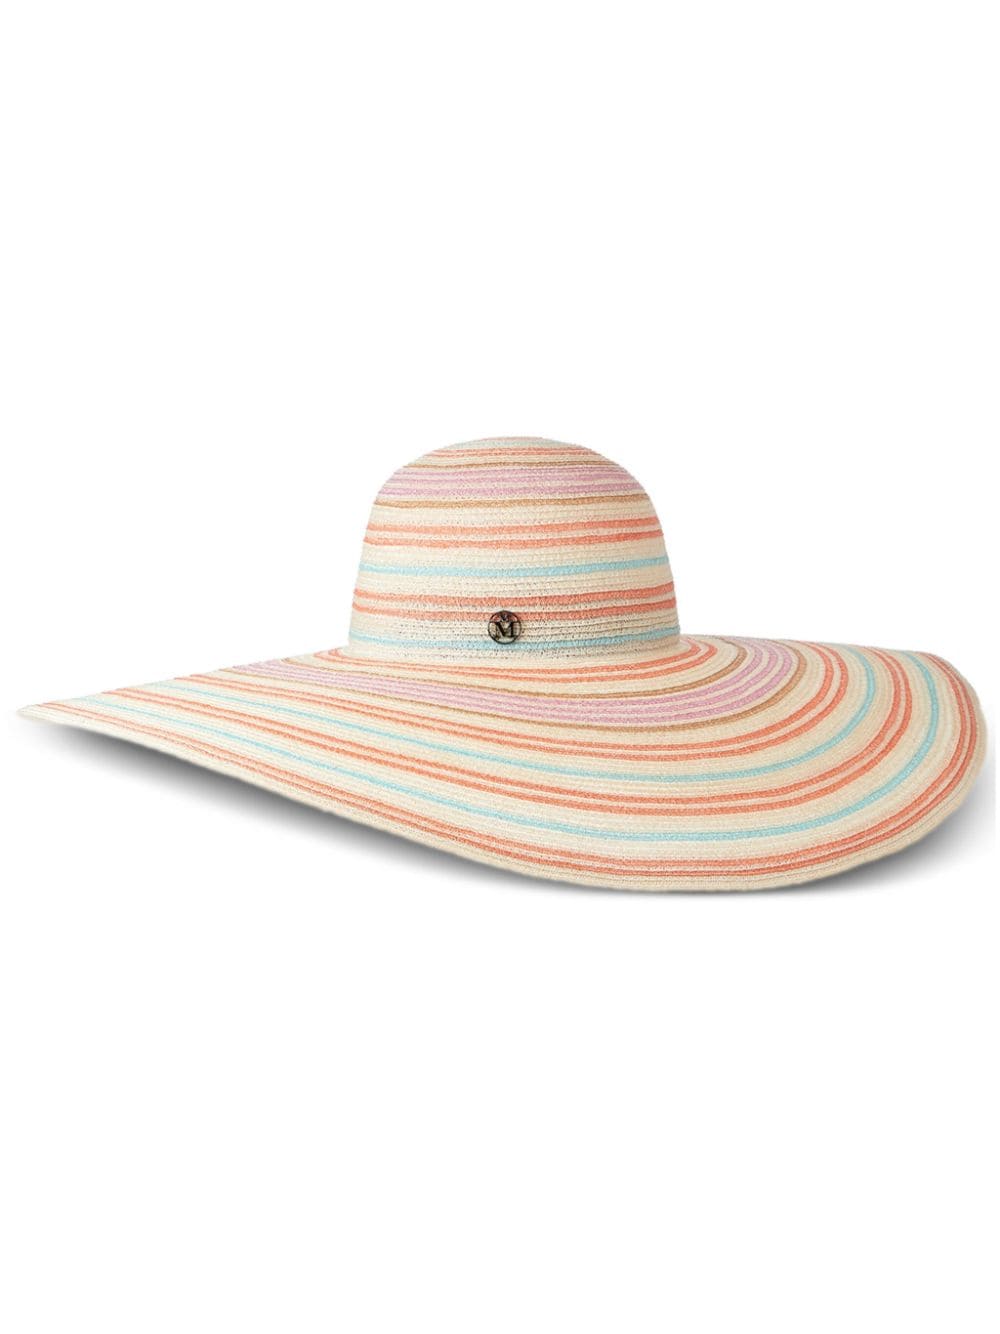 Maison Michel Blanche striped hat - Toni neutri